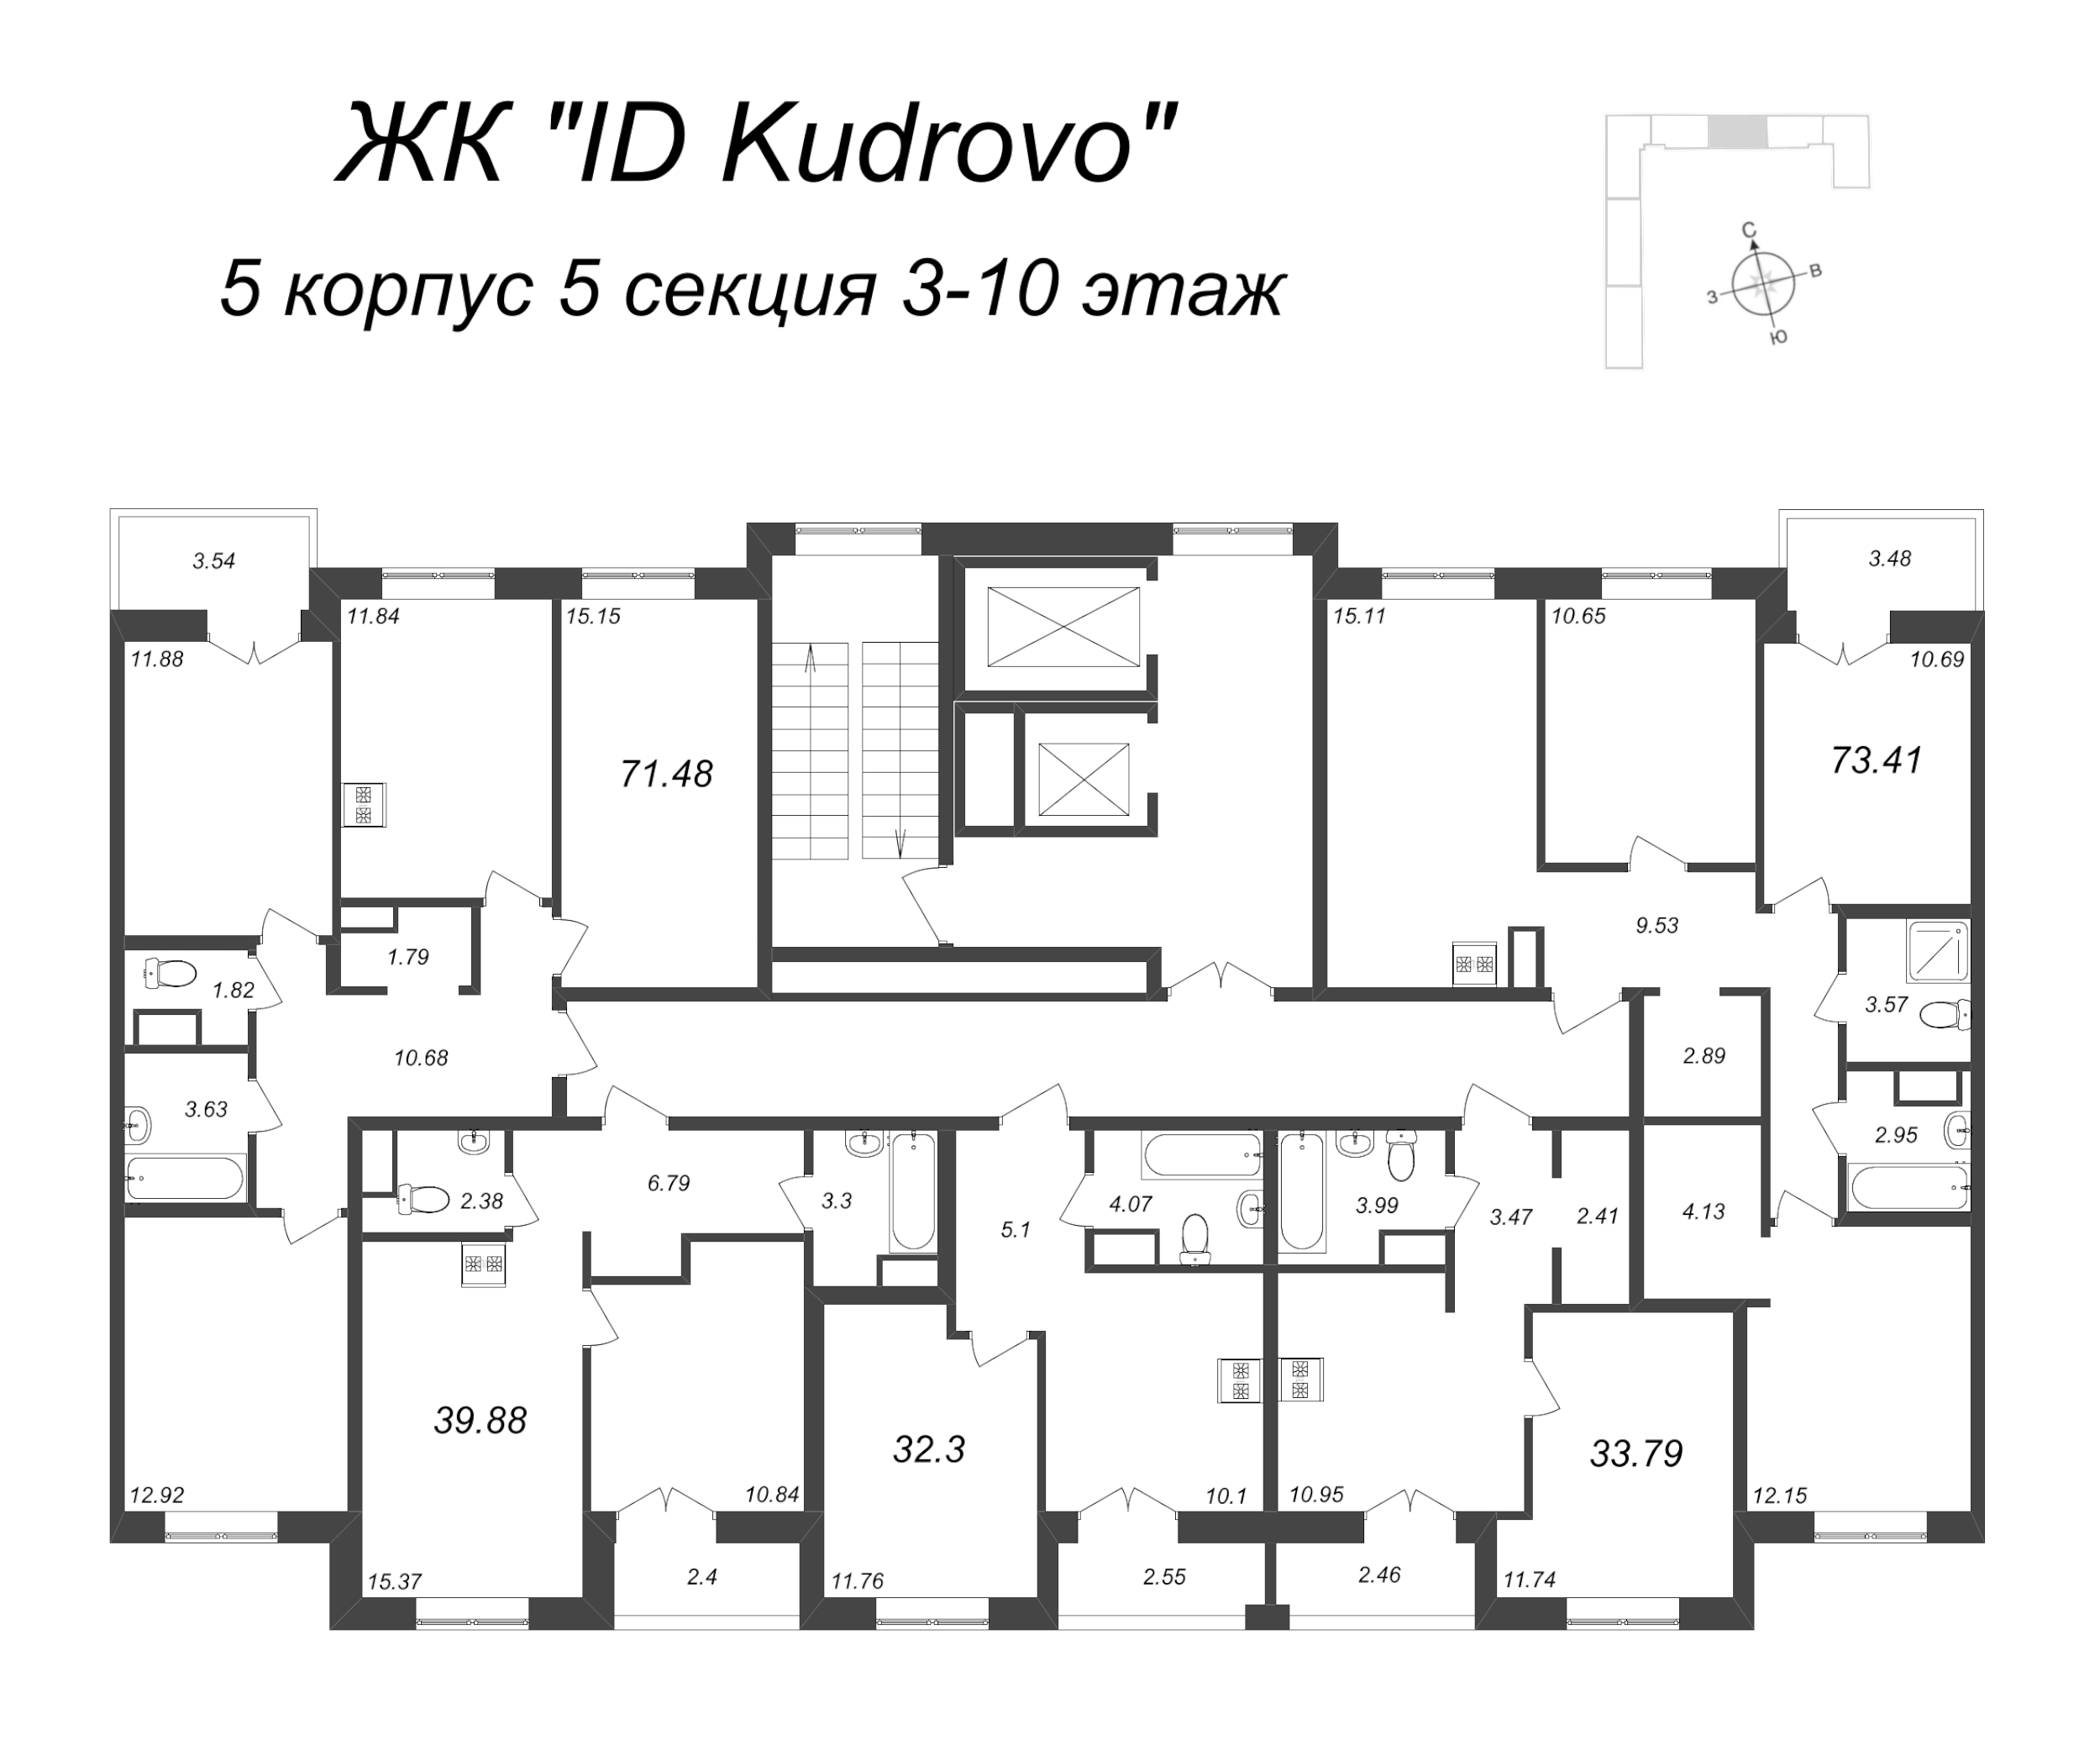 3-комнатная квартира, 71.48 м² в ЖК "ID Kudrovo" - планировка этажа